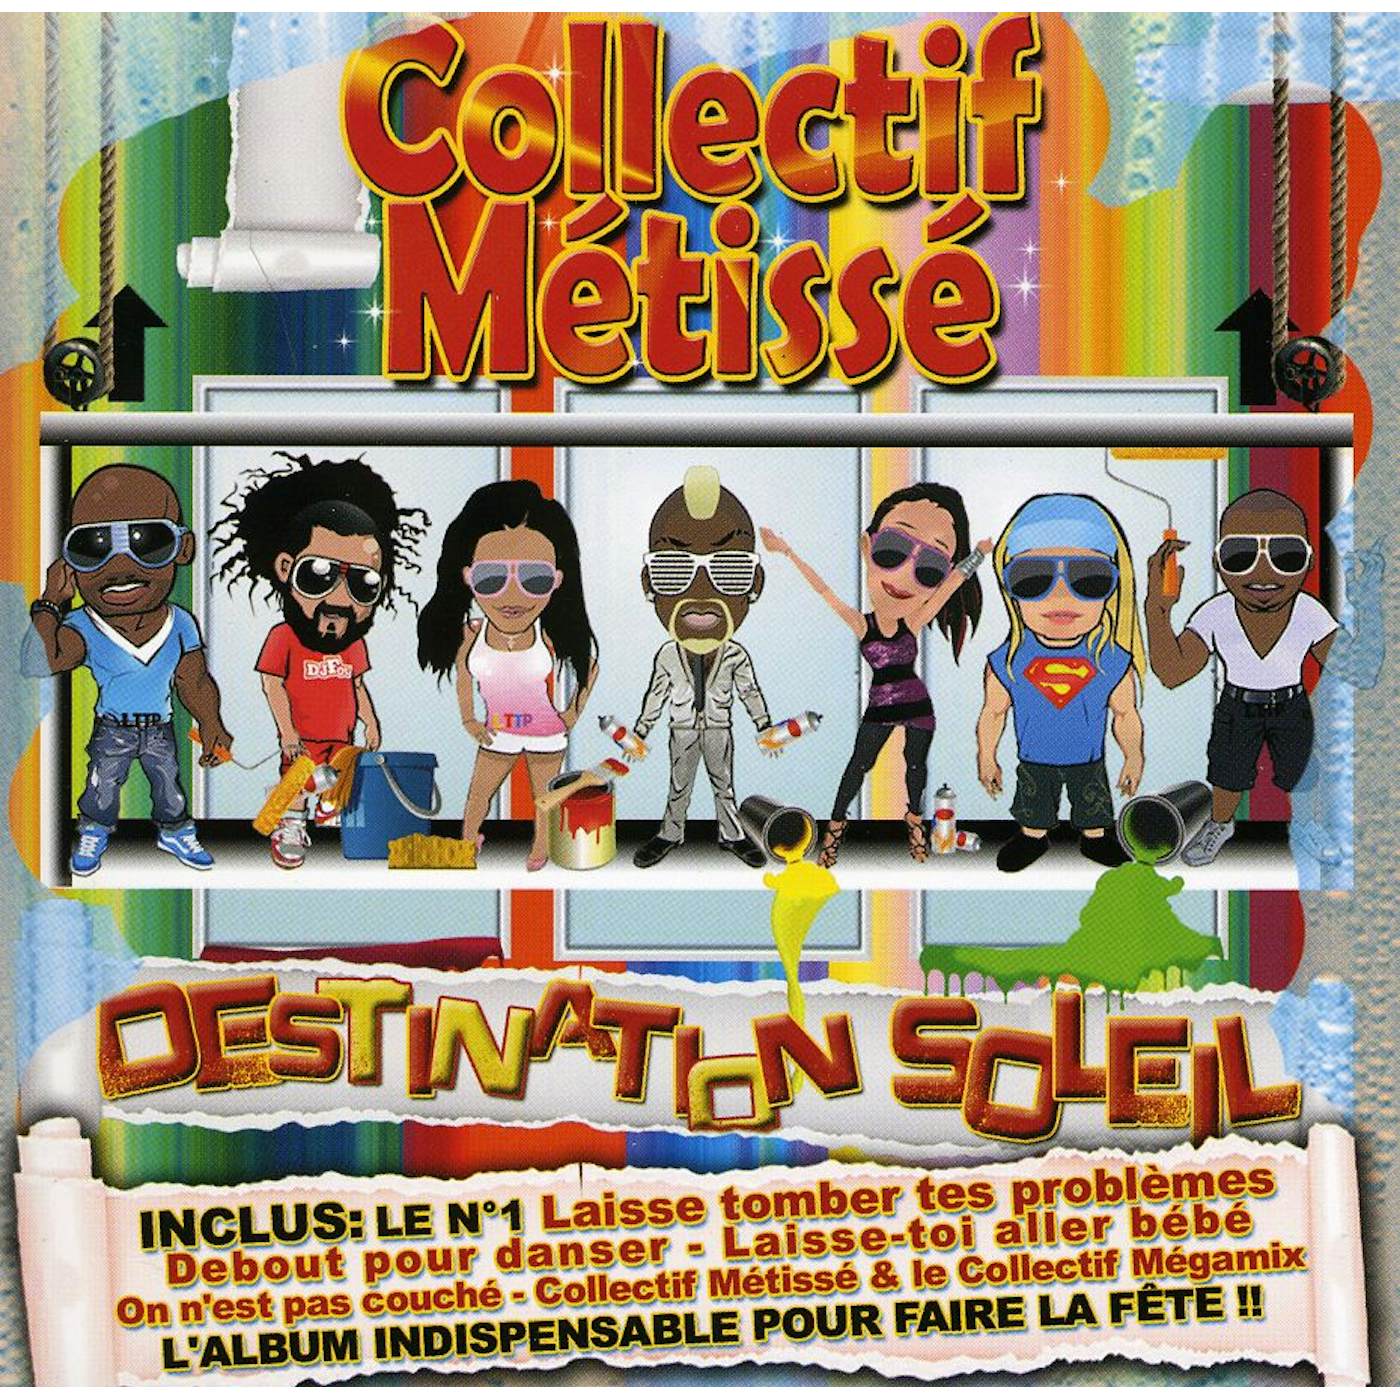 Collectif Métissé DESTINATION SOLEIL CD